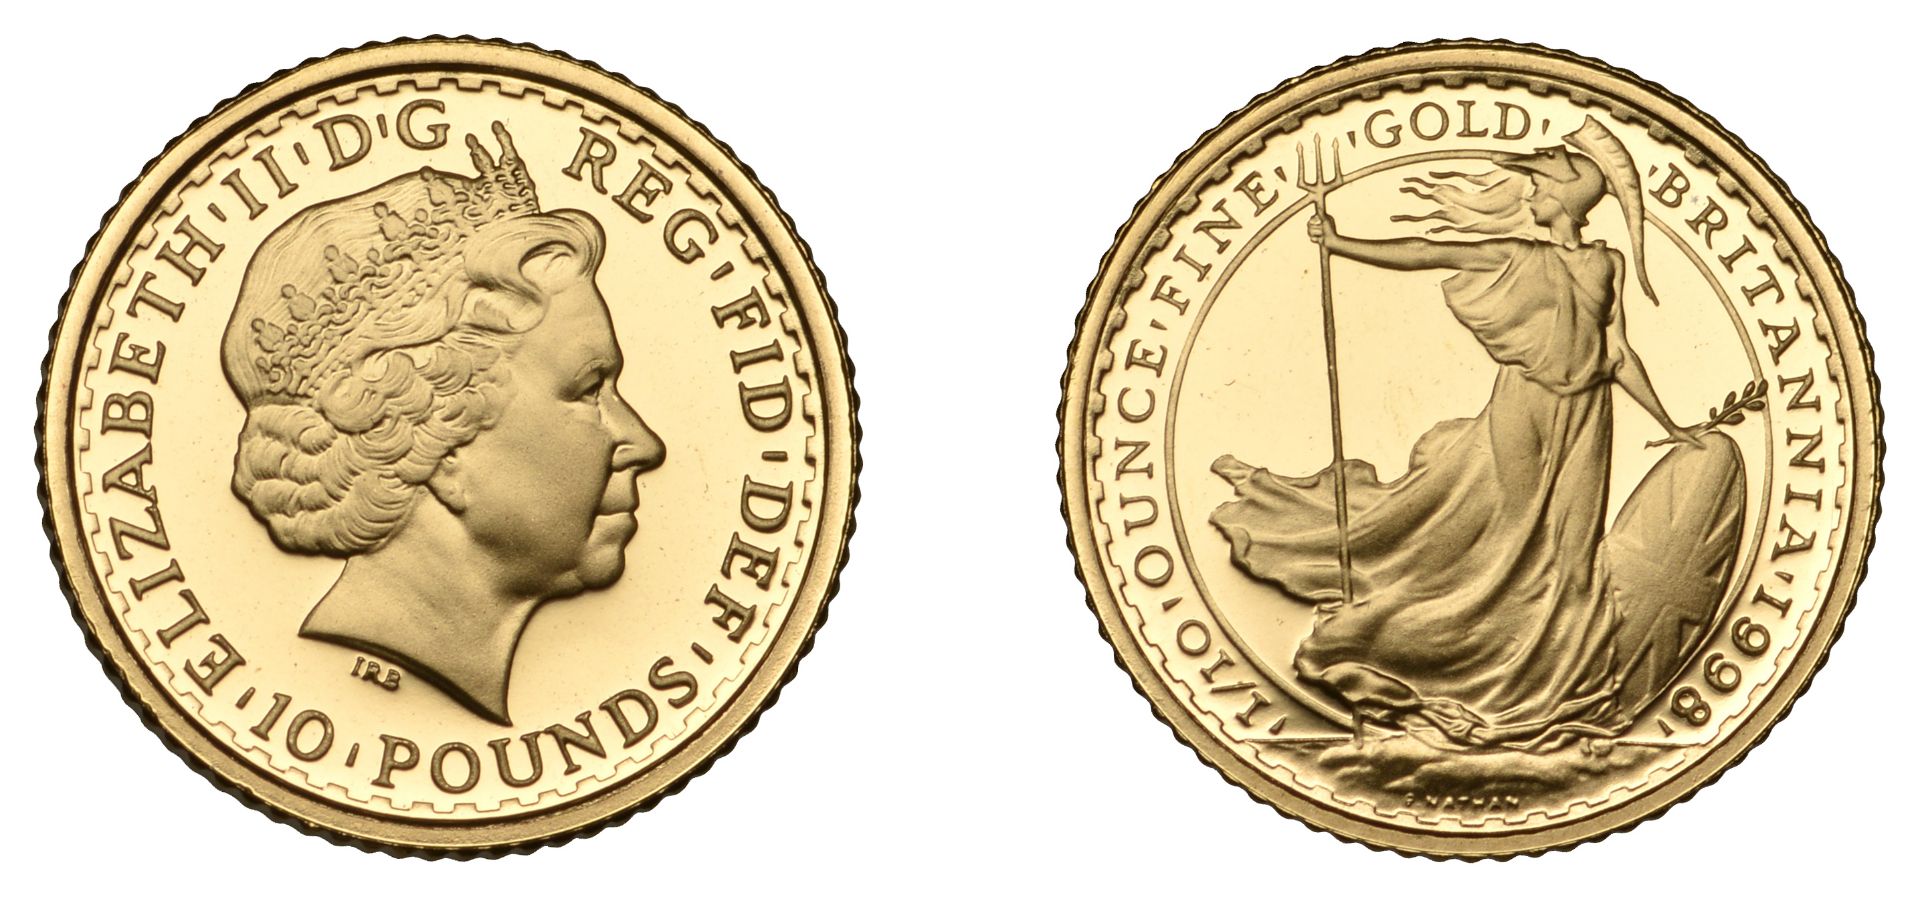 Elizabeth II (1952-2022), Britannia issues, Britannia gold Proof Ten Pounds, 1998 (S BGC3)....